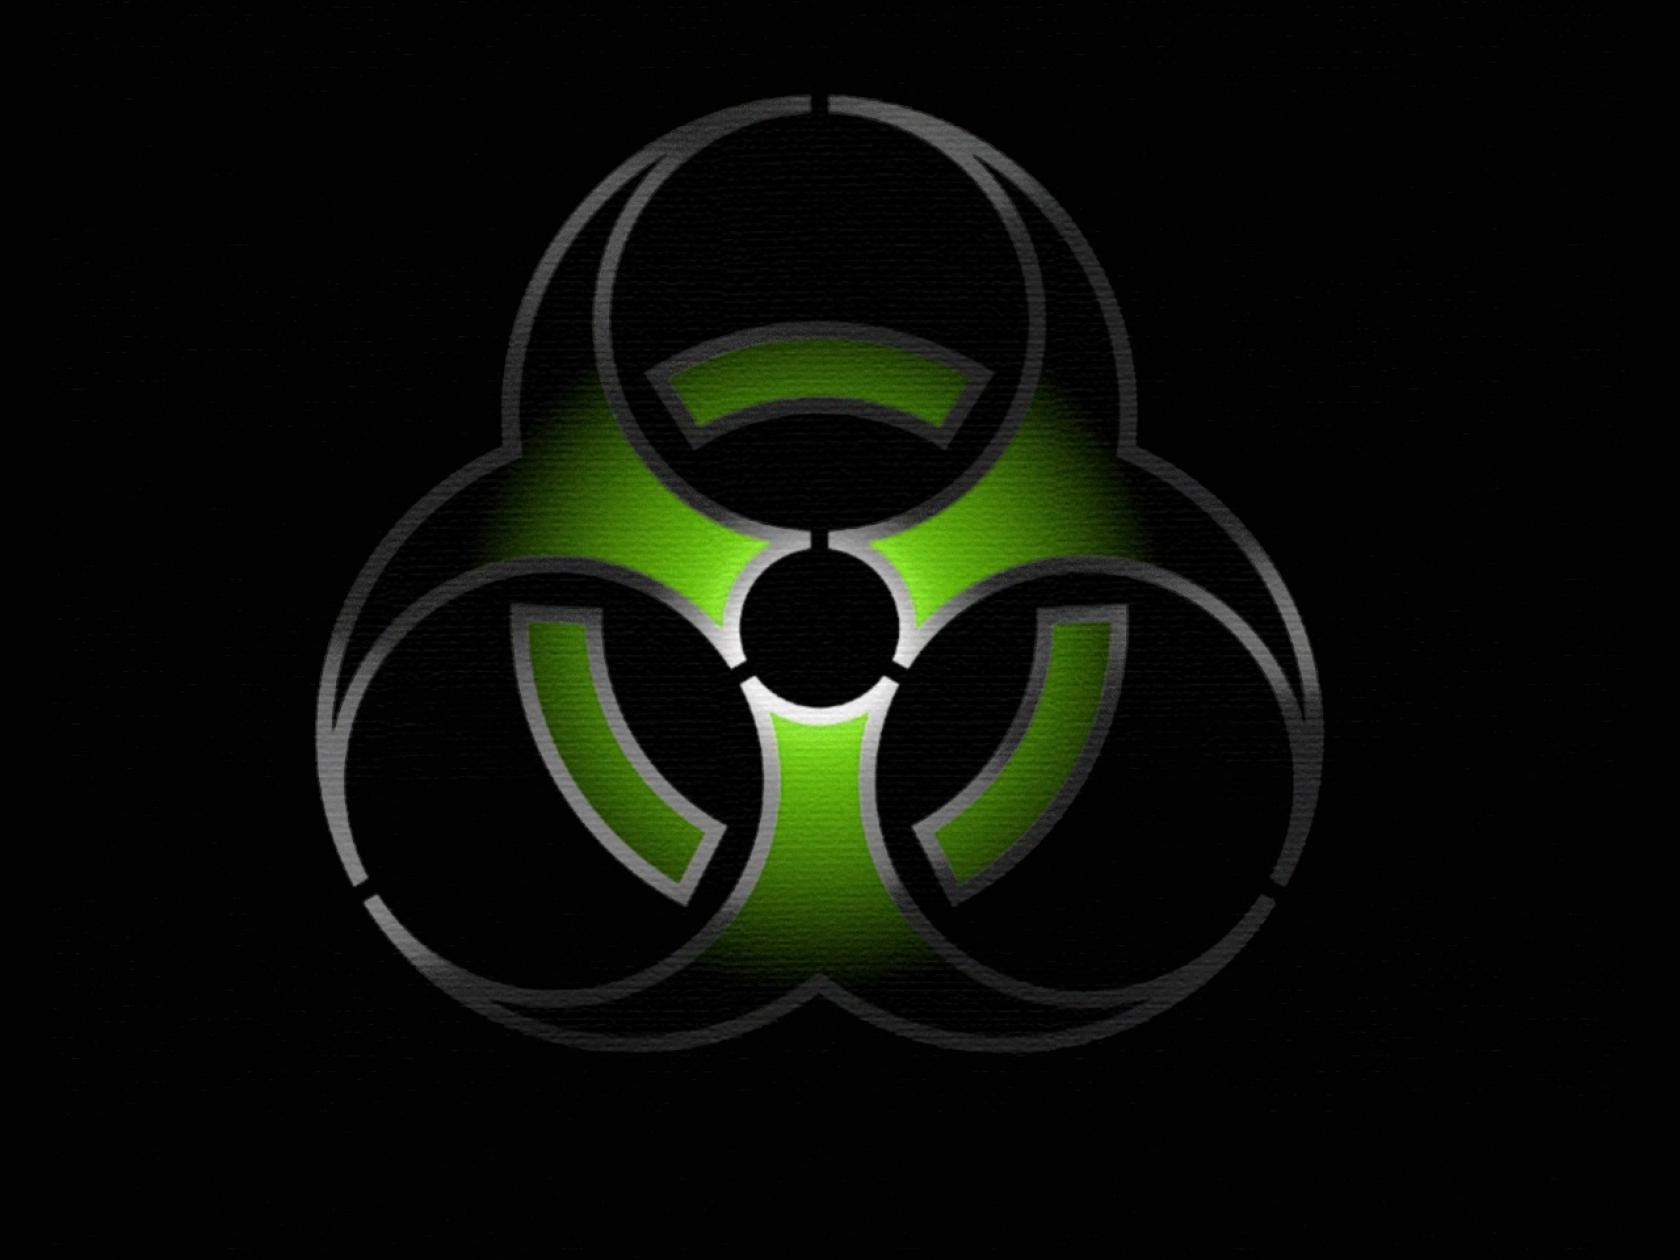 Biohazard Symbol HD Wallpaper Free Download 1920x1080PX